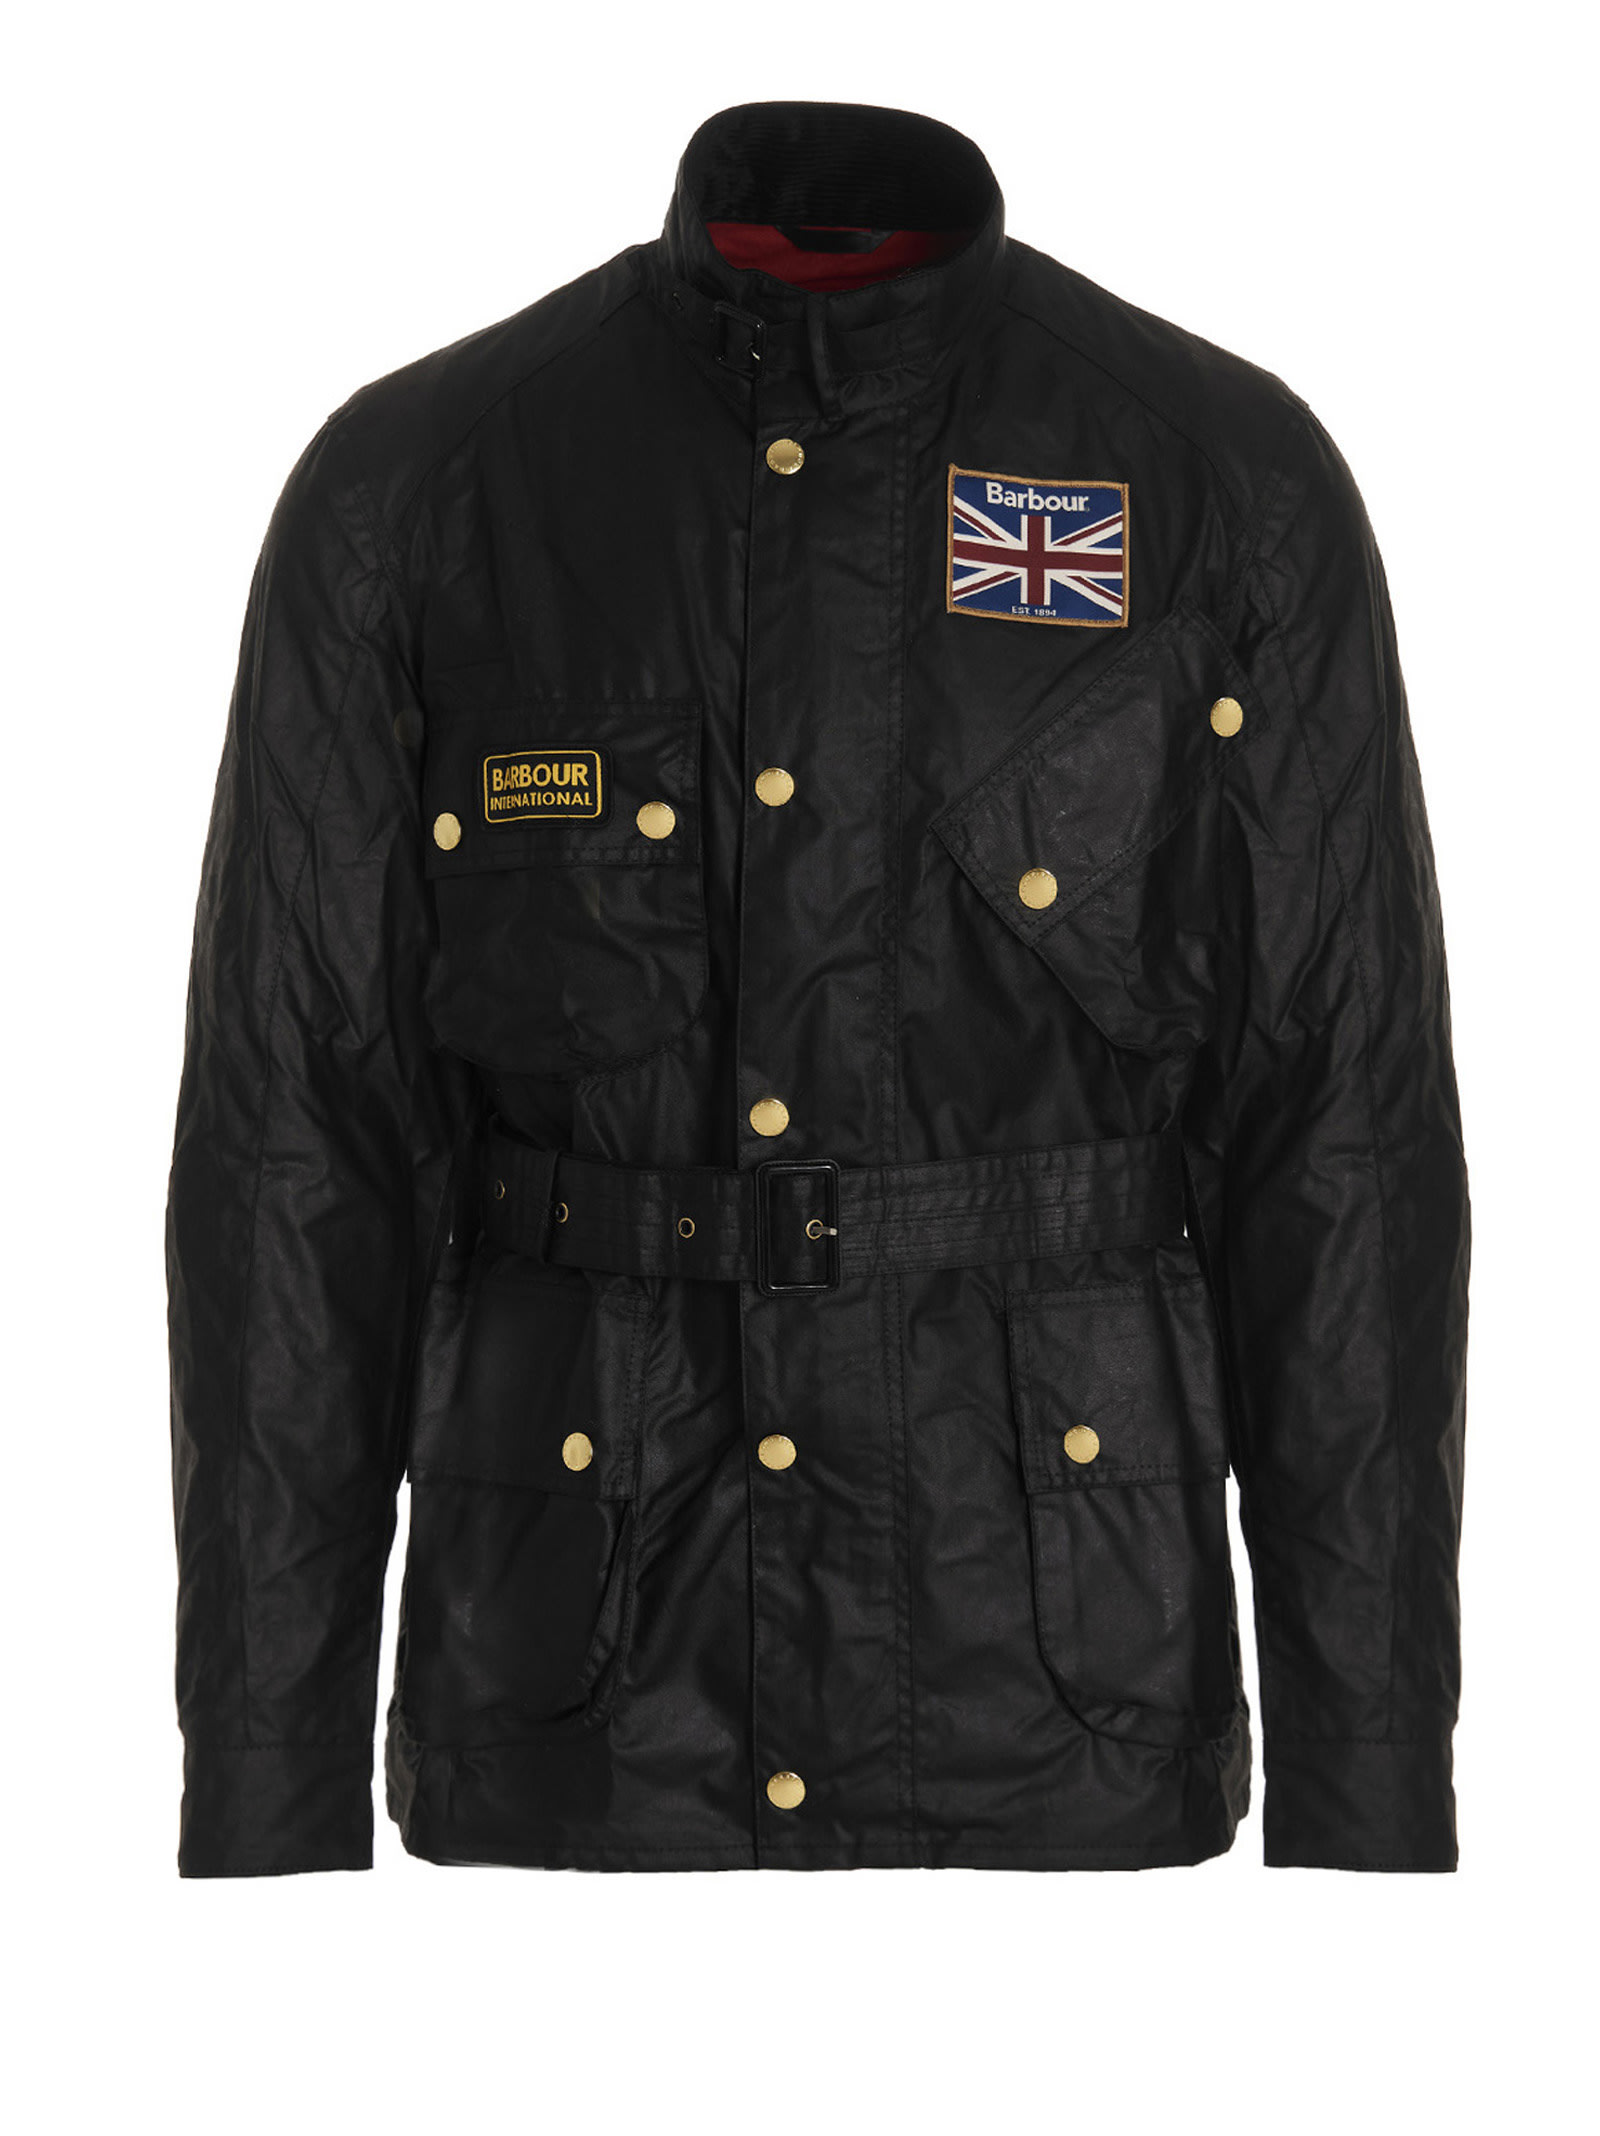 Barbour b.intl Union Jack Jacket